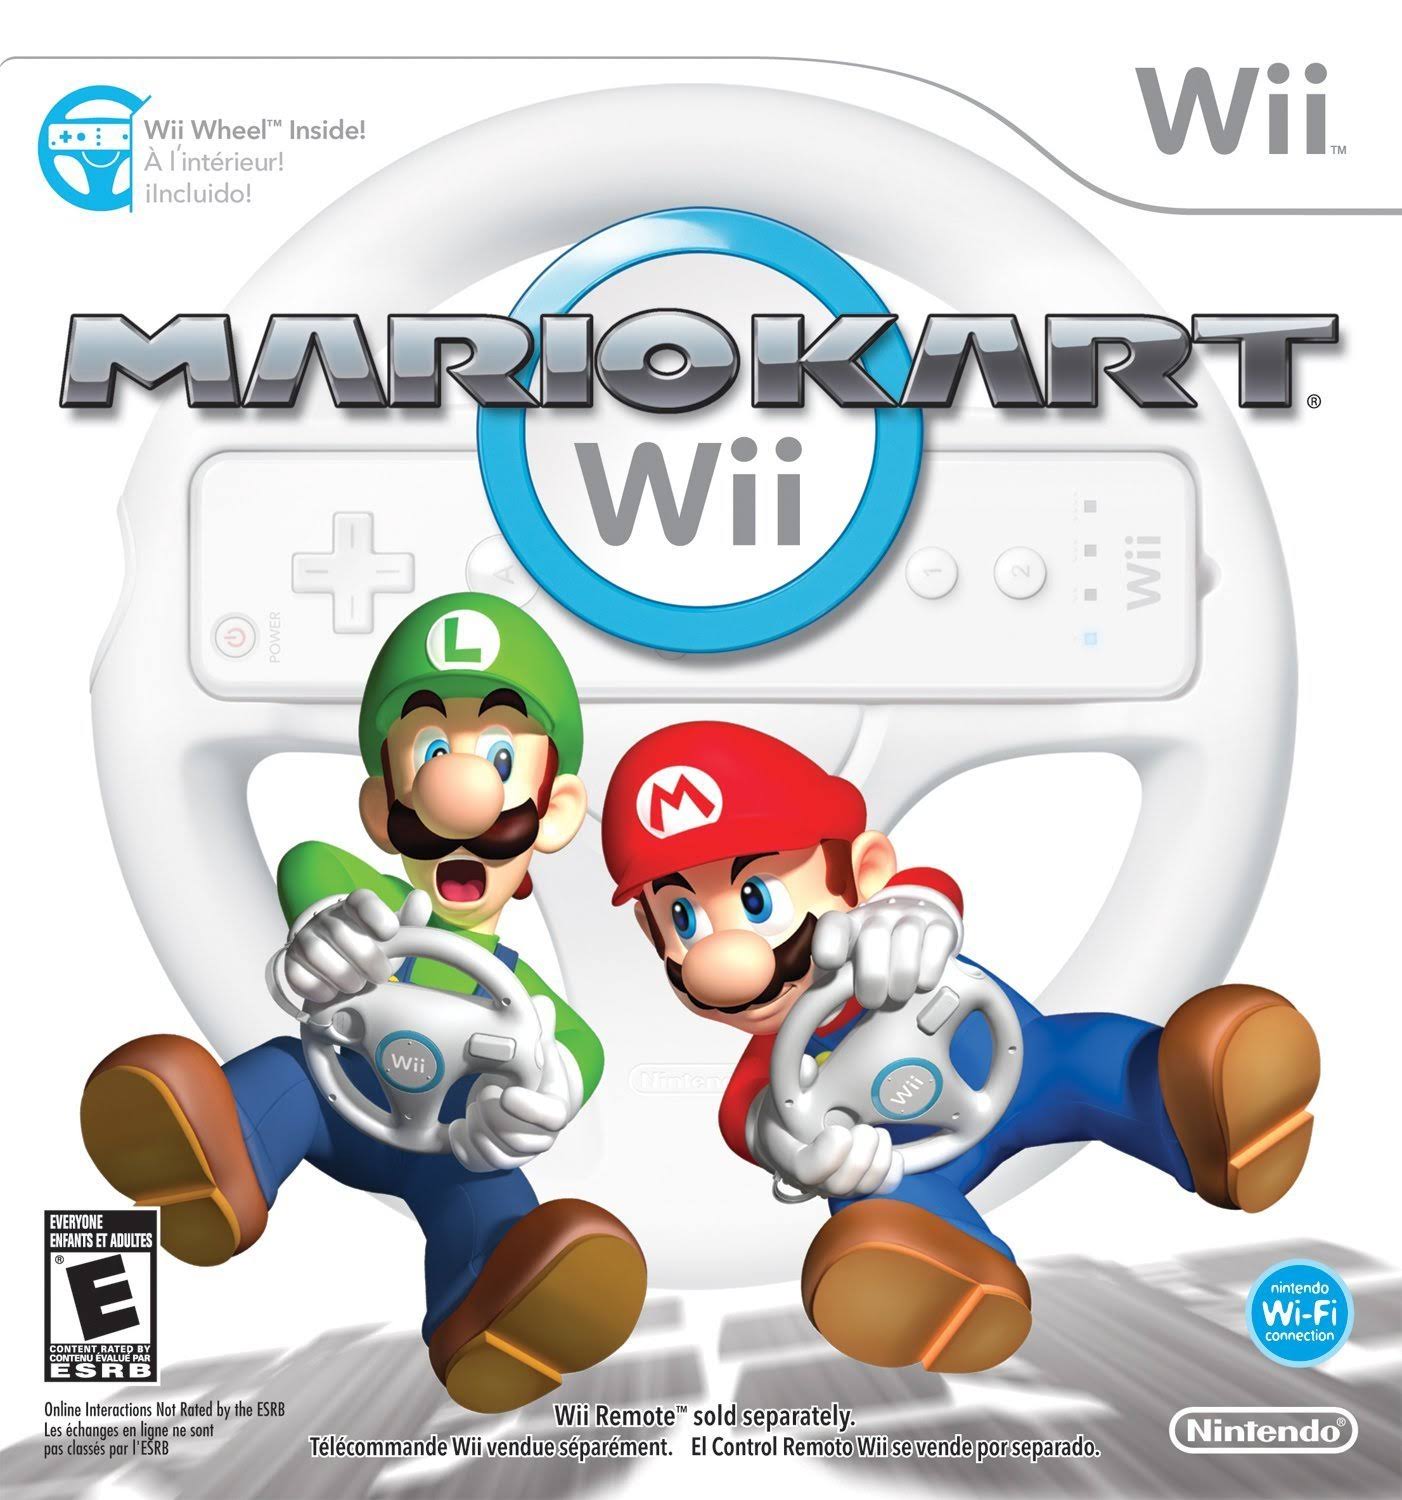 Mario Kart Wii Wheel - Nintendo Wii